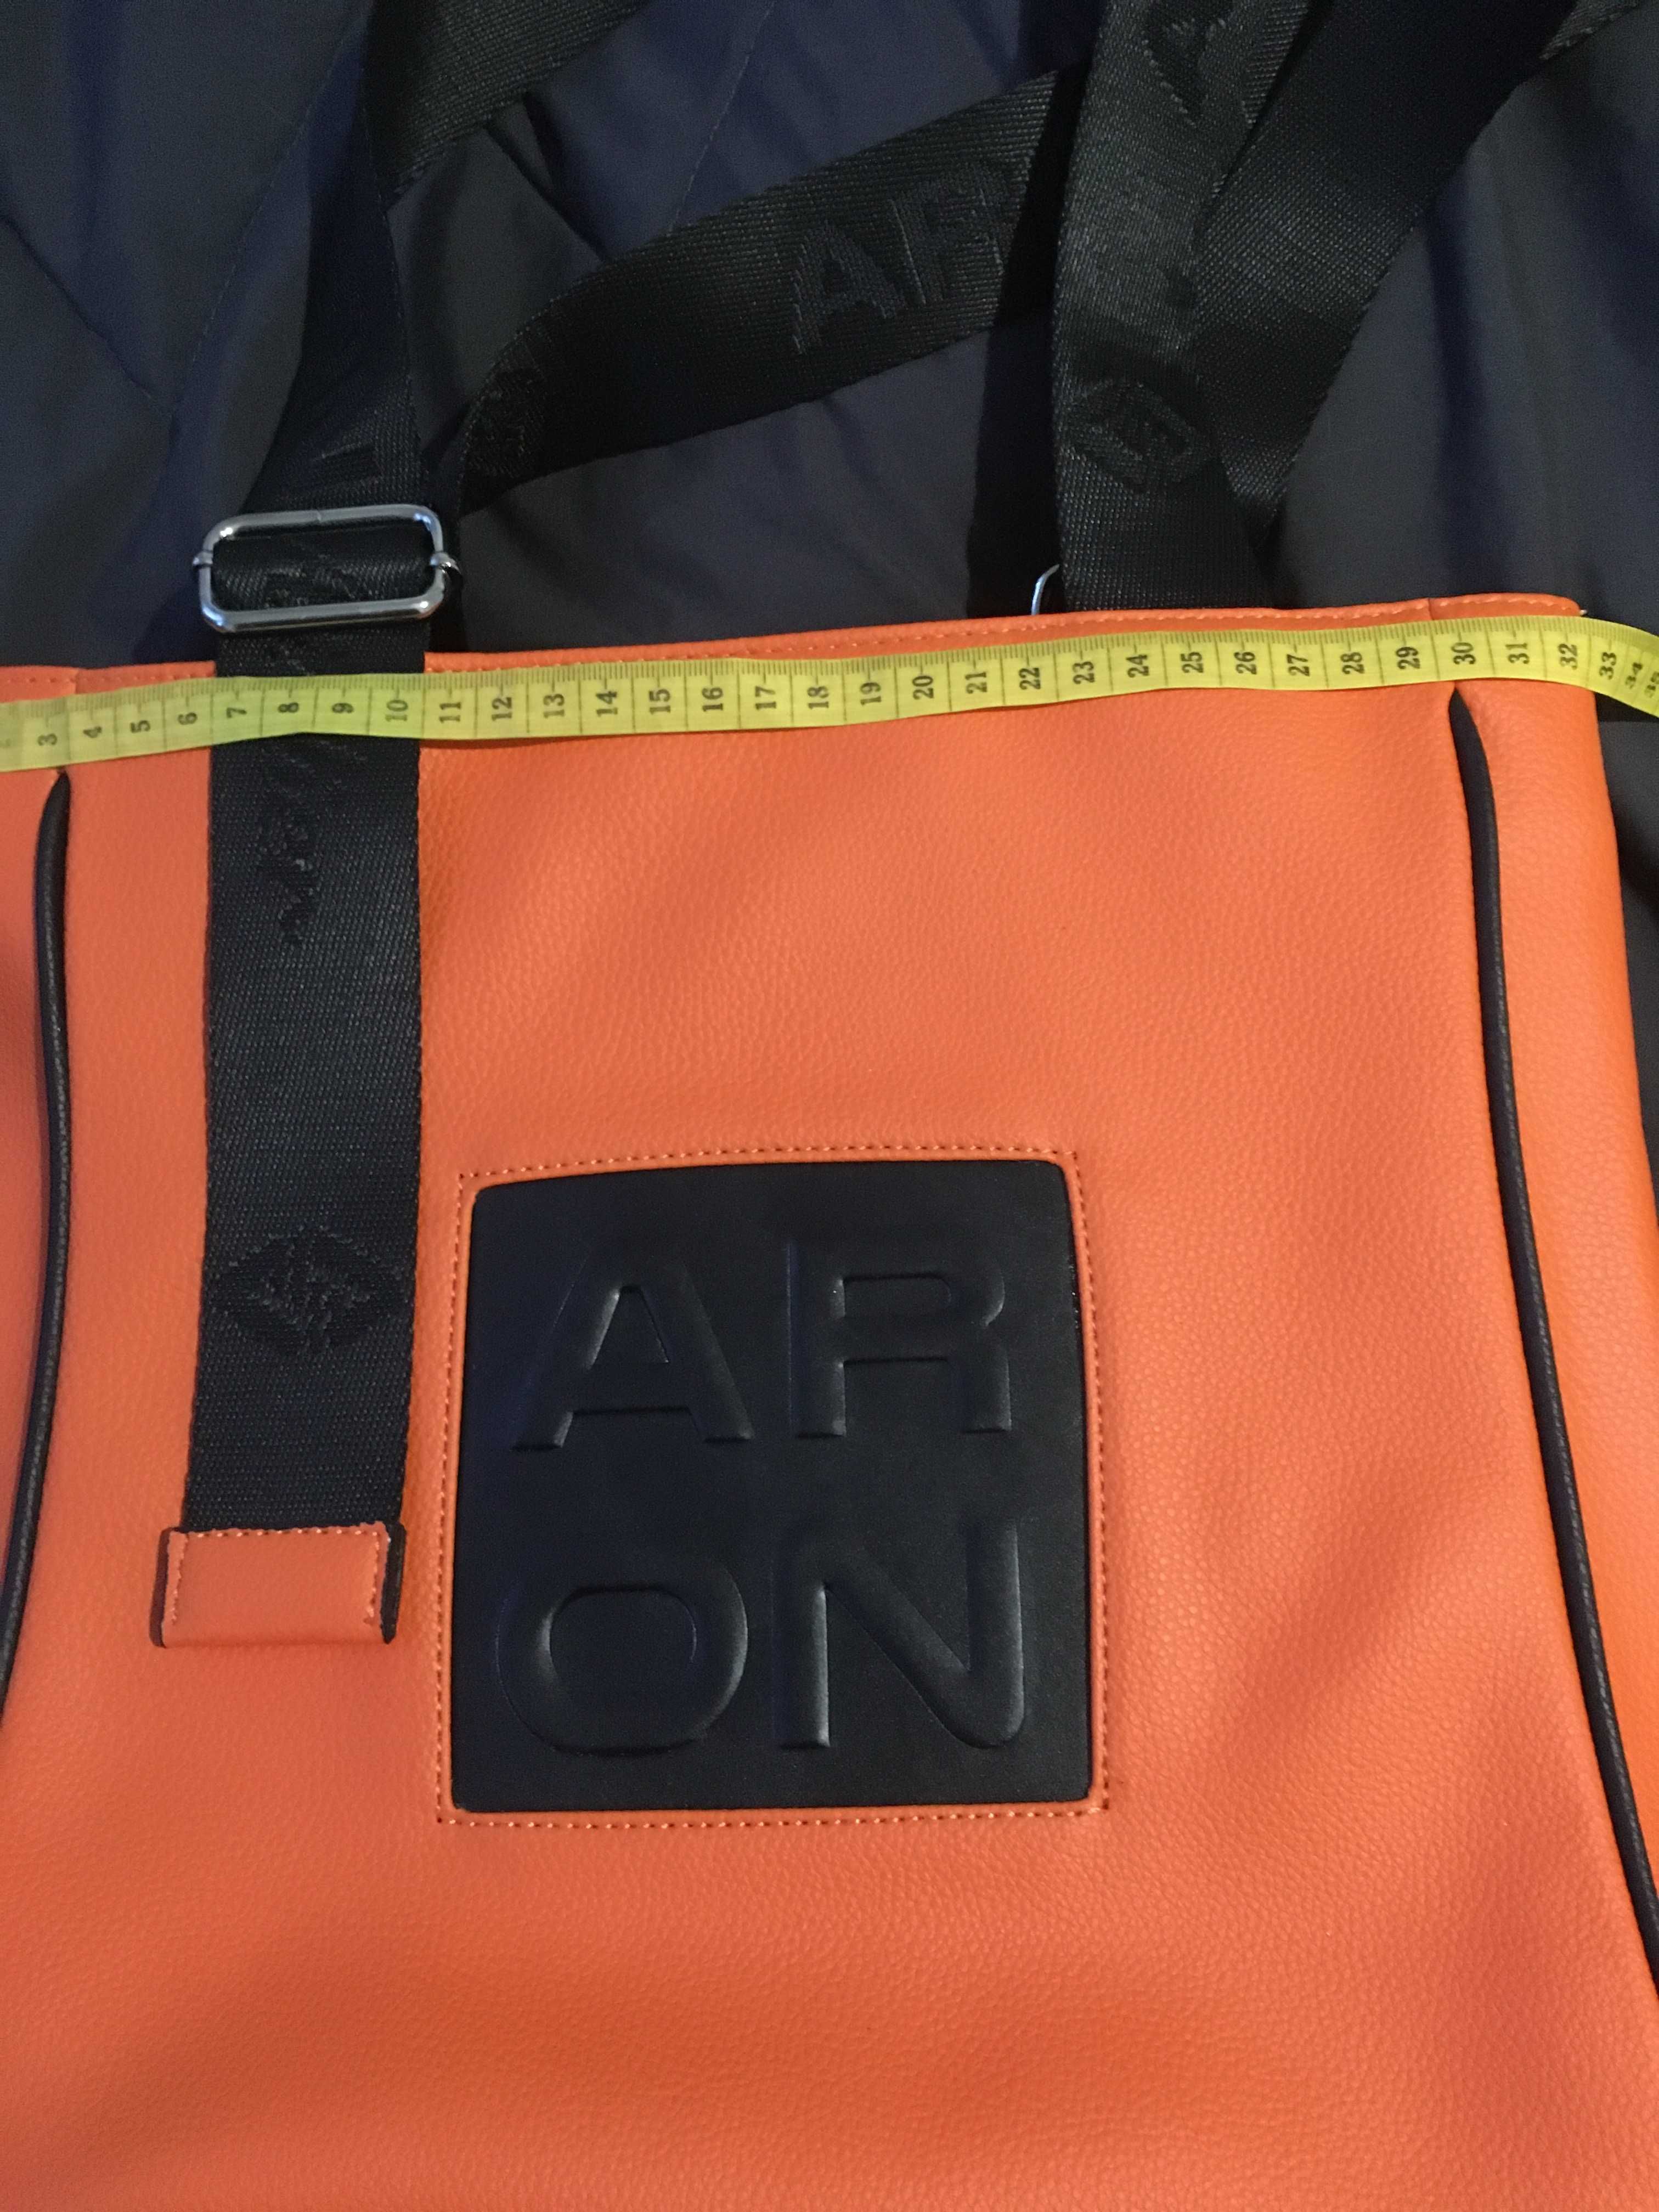 Оранжева чанта +Нова чанта за парти